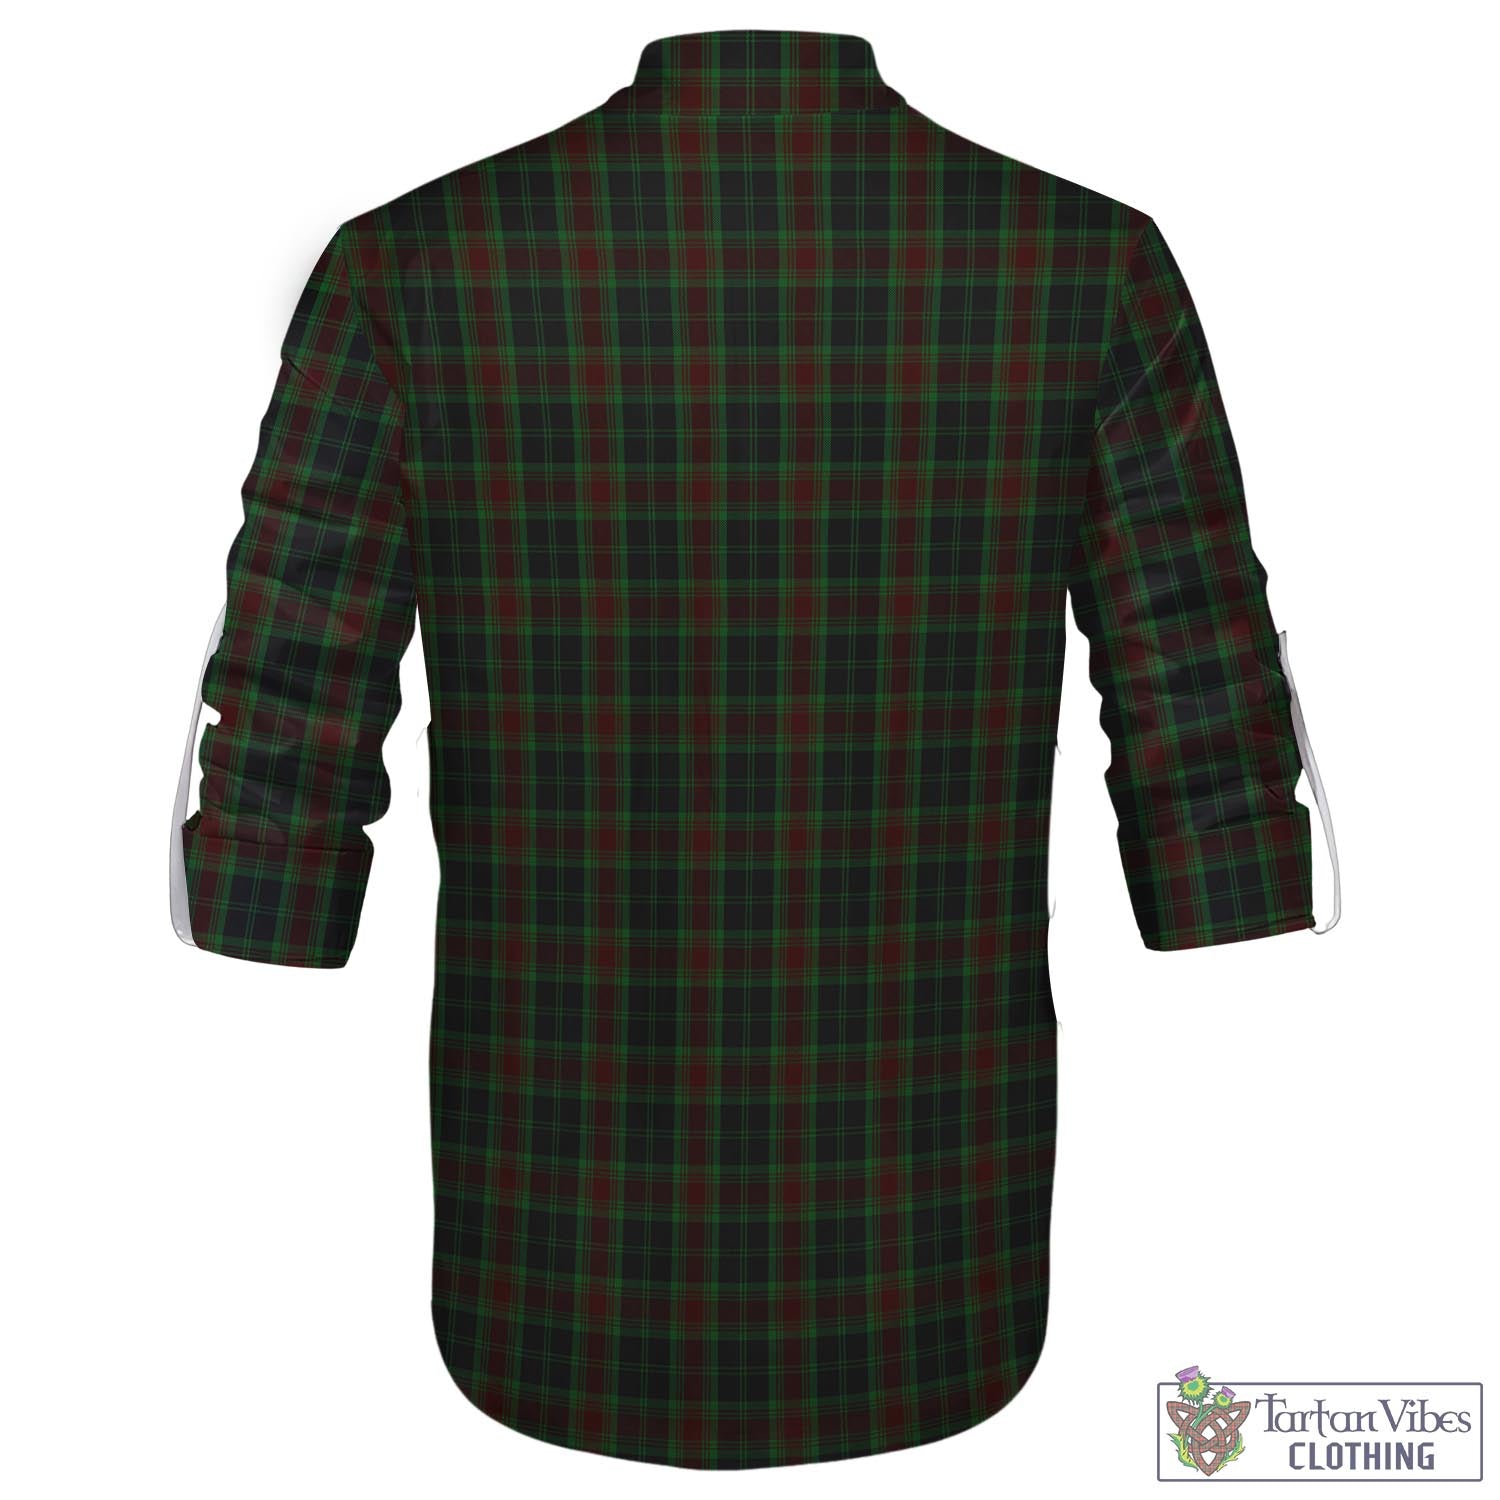 Tartan Vibes Clothing Carlow County Ireland Tartan Men's Scottish Traditional Jacobite Ghillie Kilt Shirt